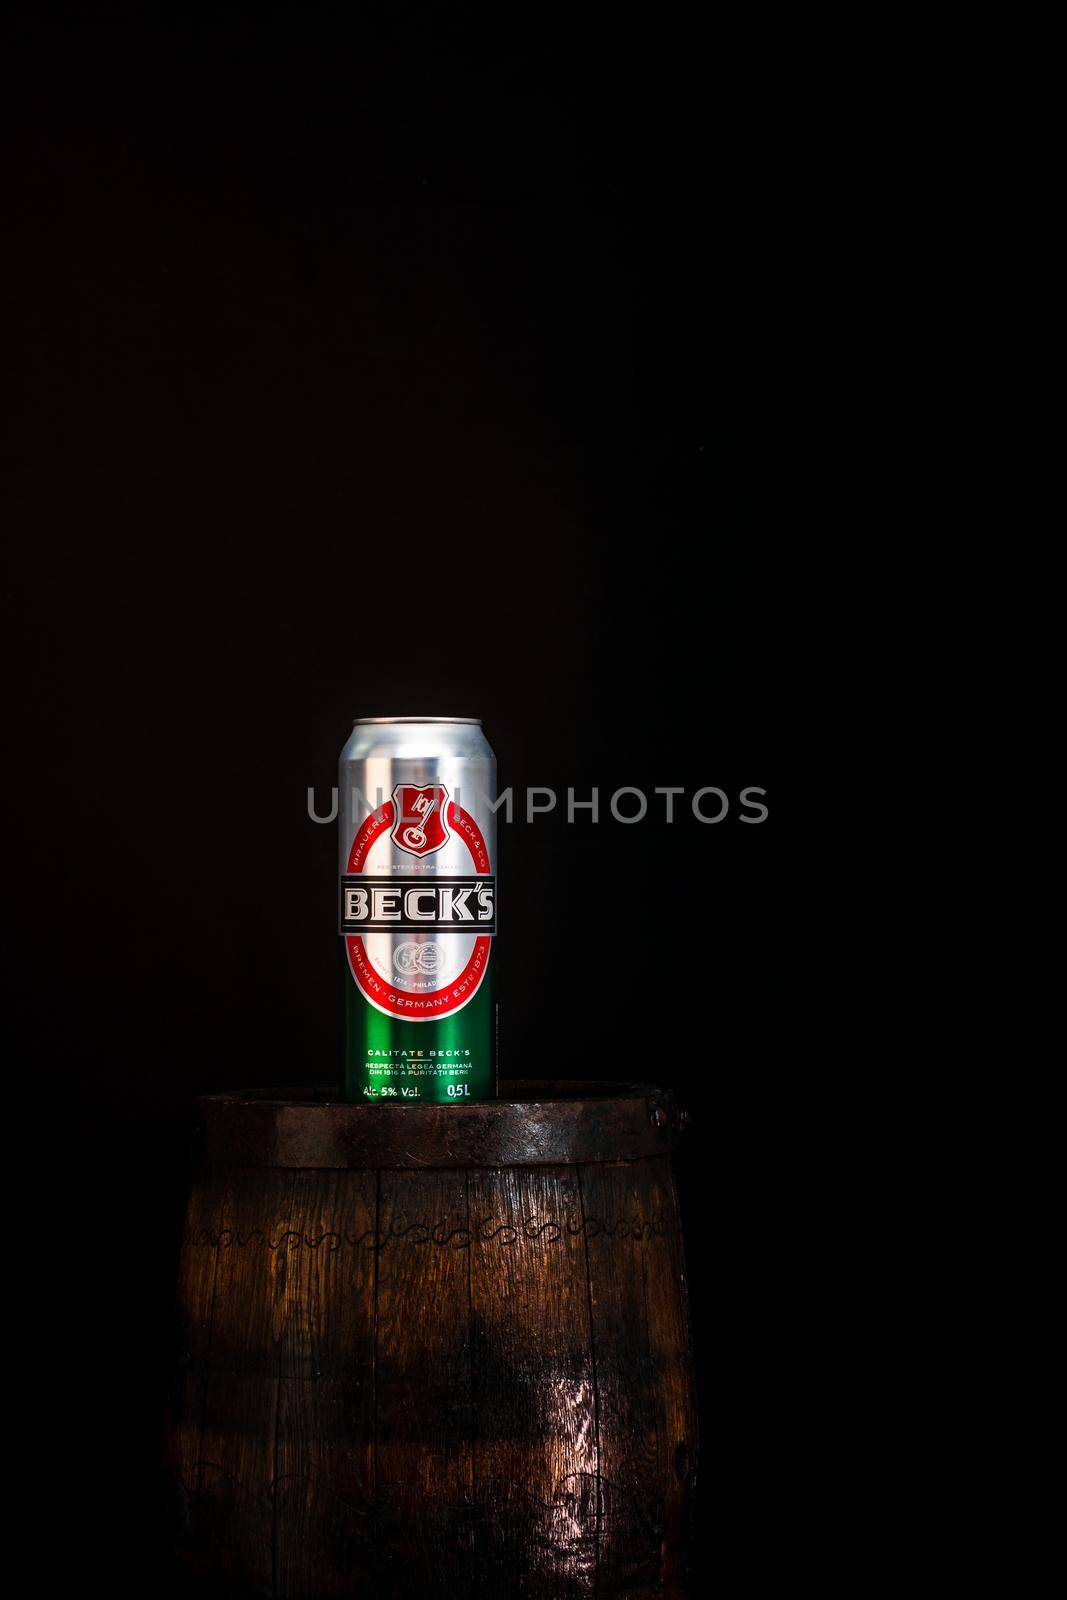 Can of Becks beer on beer barrel with dark background. Illustrative editorial photo Bucharest, Romania, 2021 by vladispas